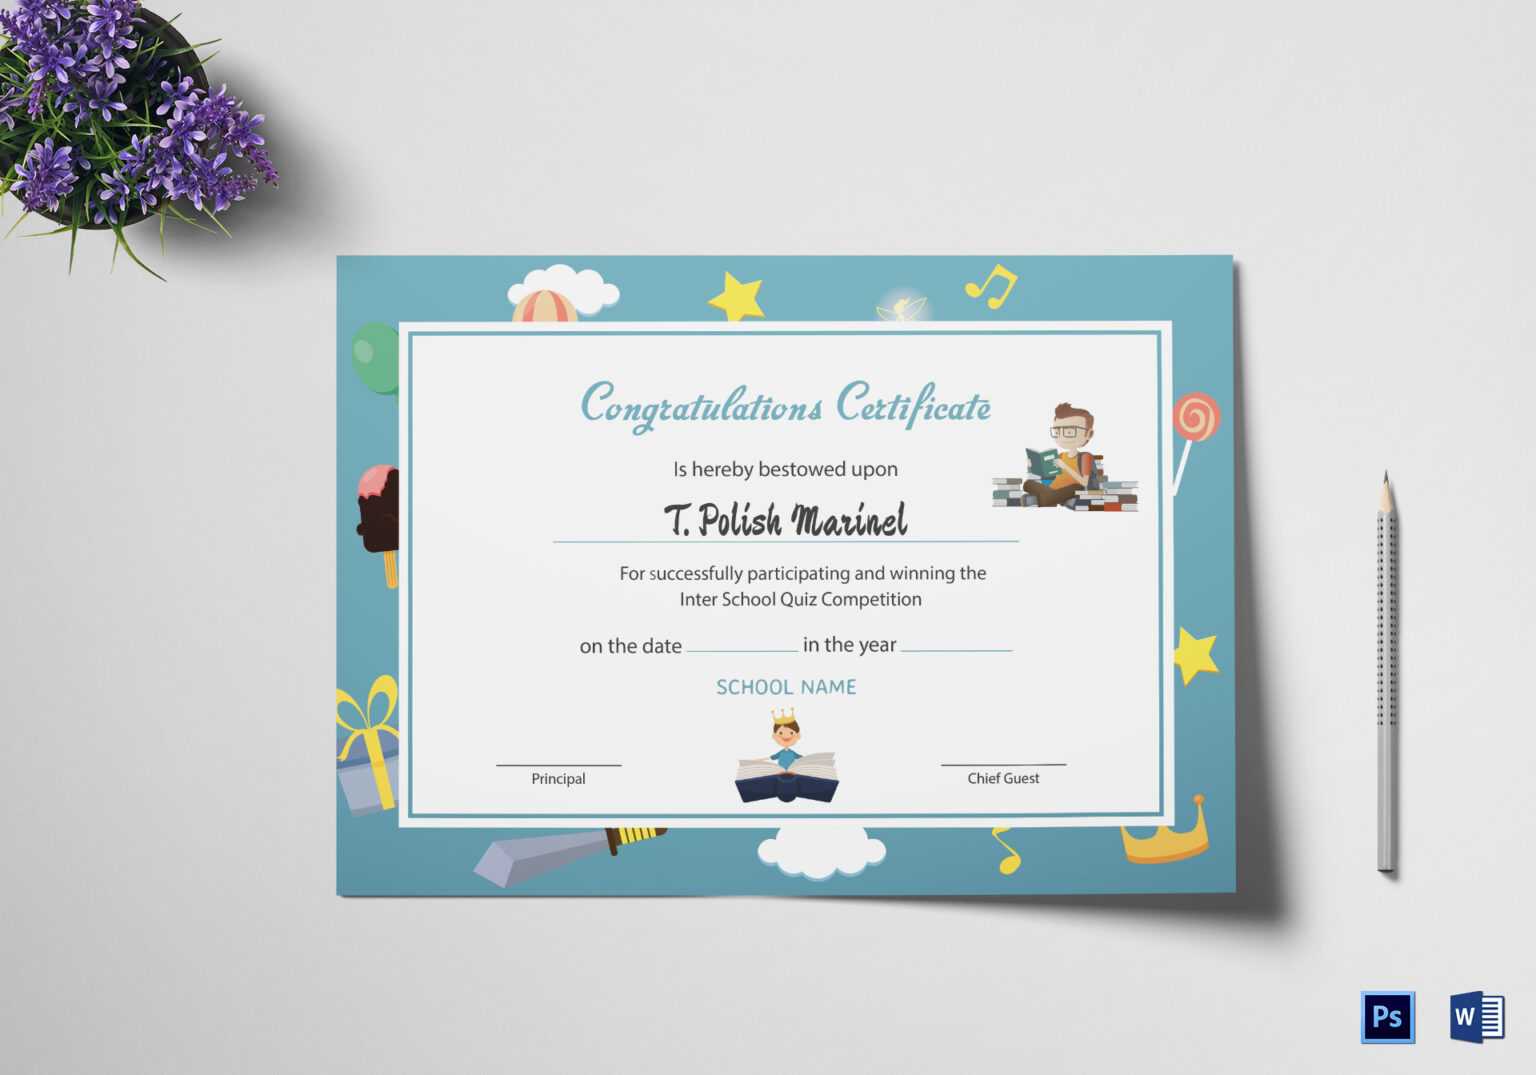 Congratulation Certificates Templates - Calep.midnightpig.co in ...